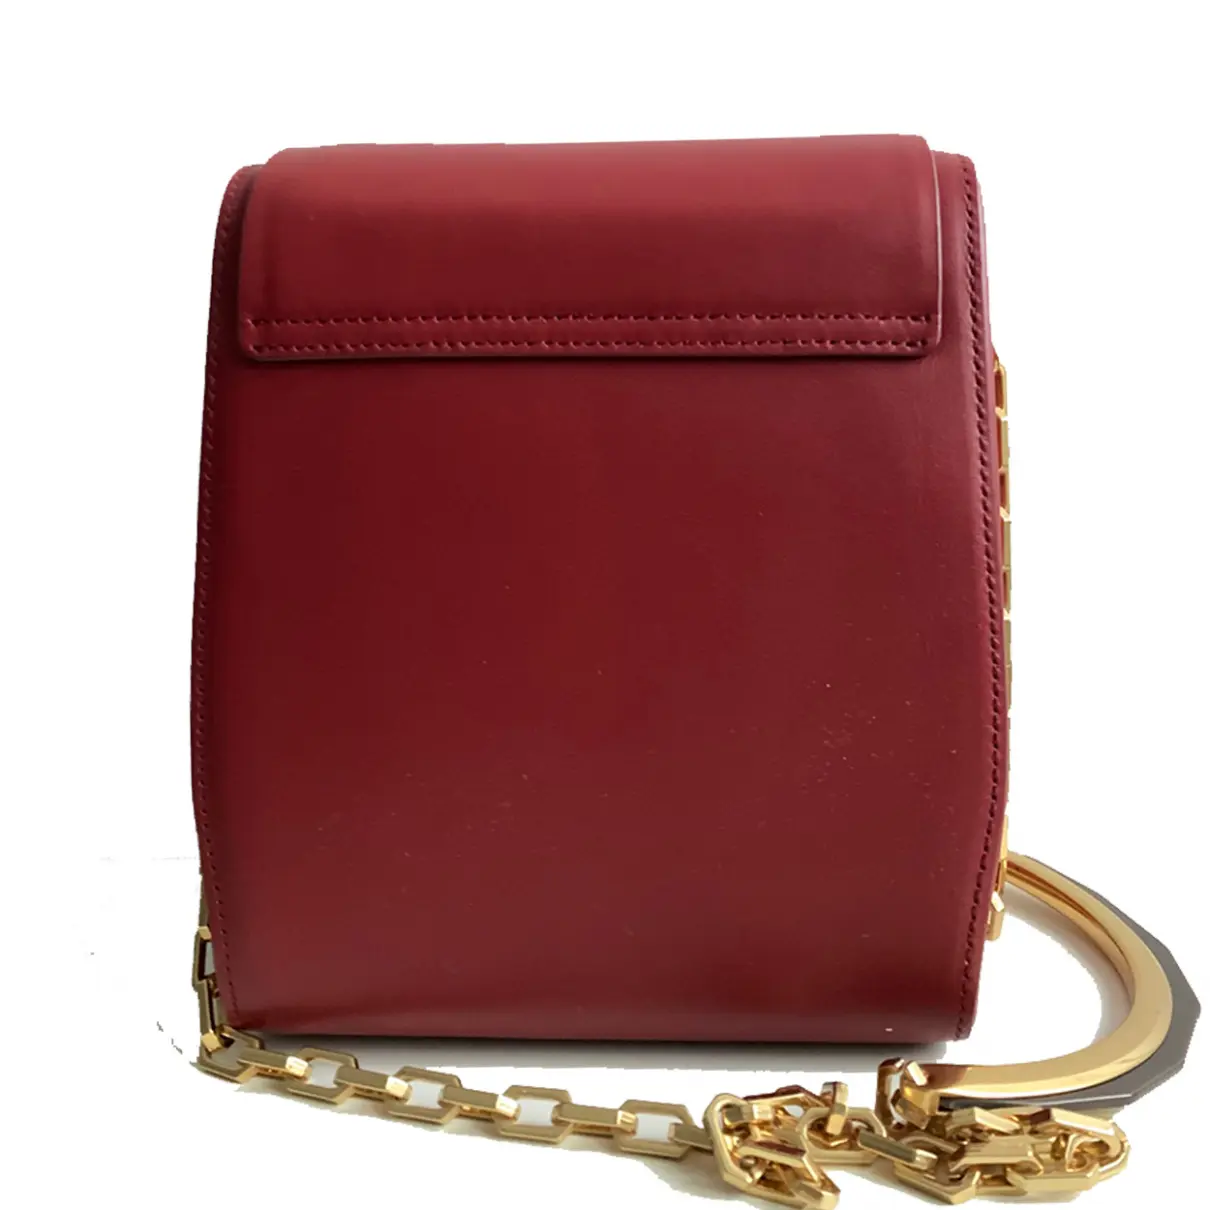 Buy The Volon Leather crossbody bag online